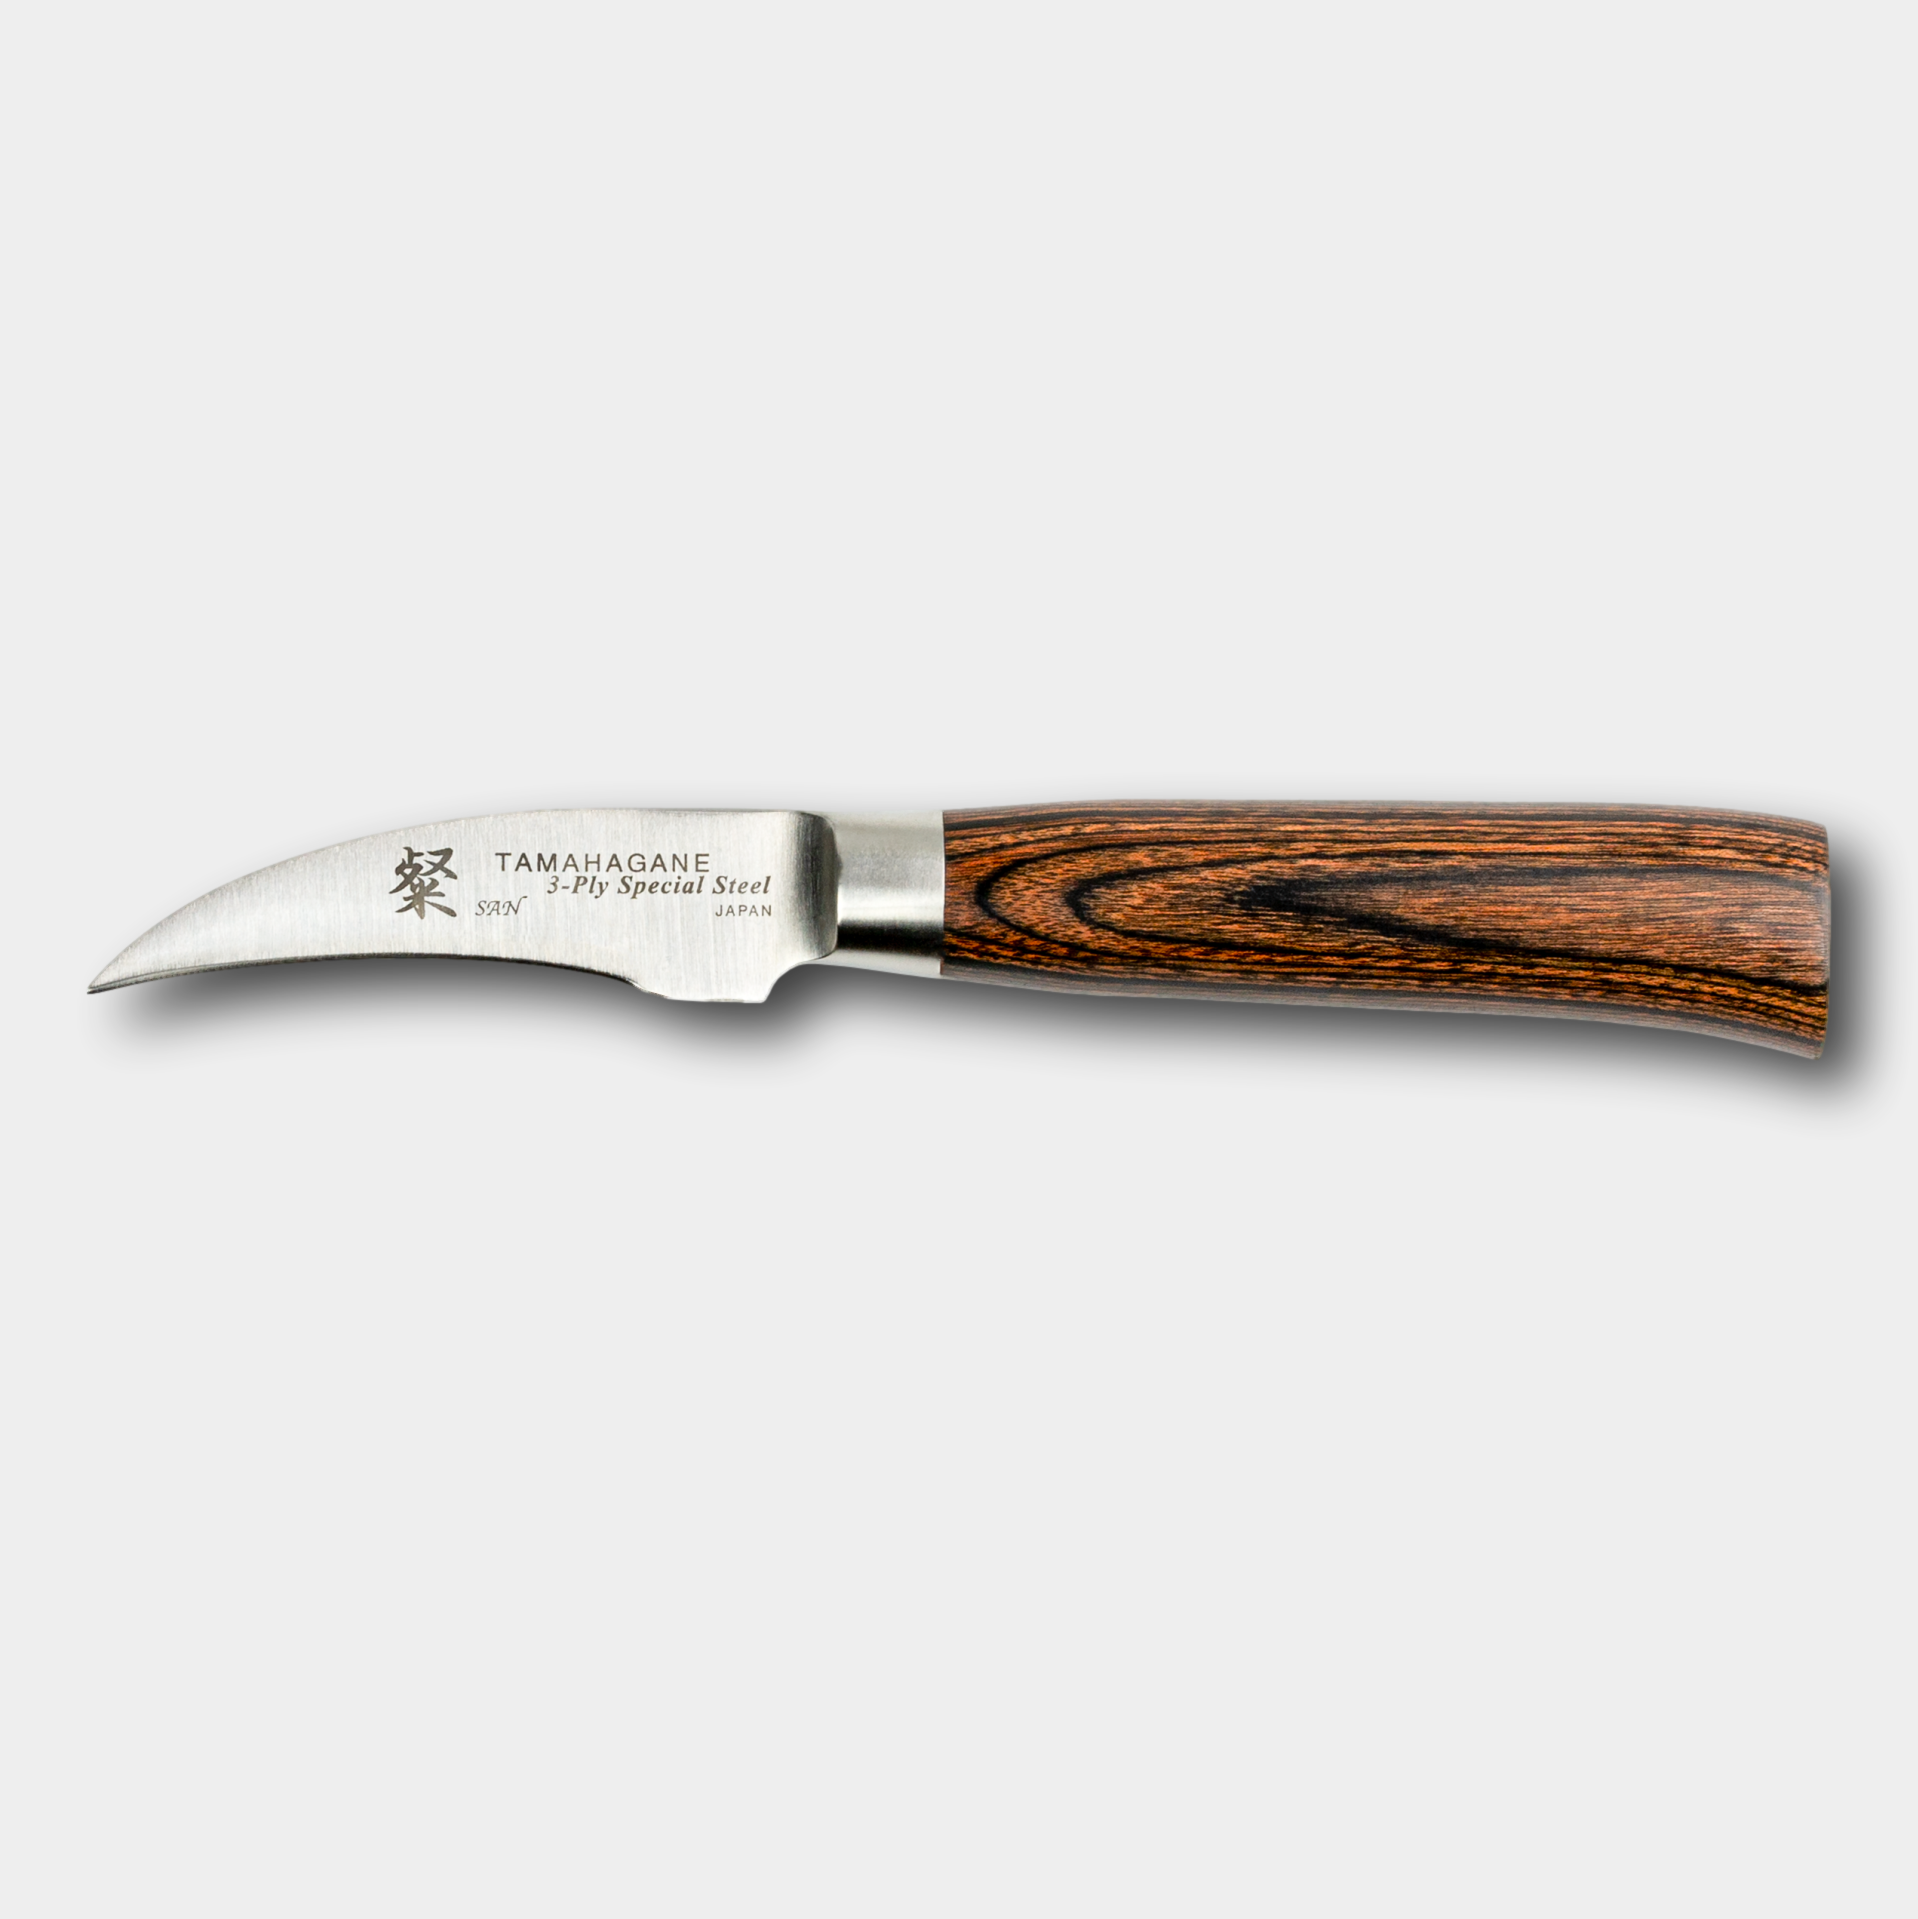 Tamahagane San 7cm Peeling Knife